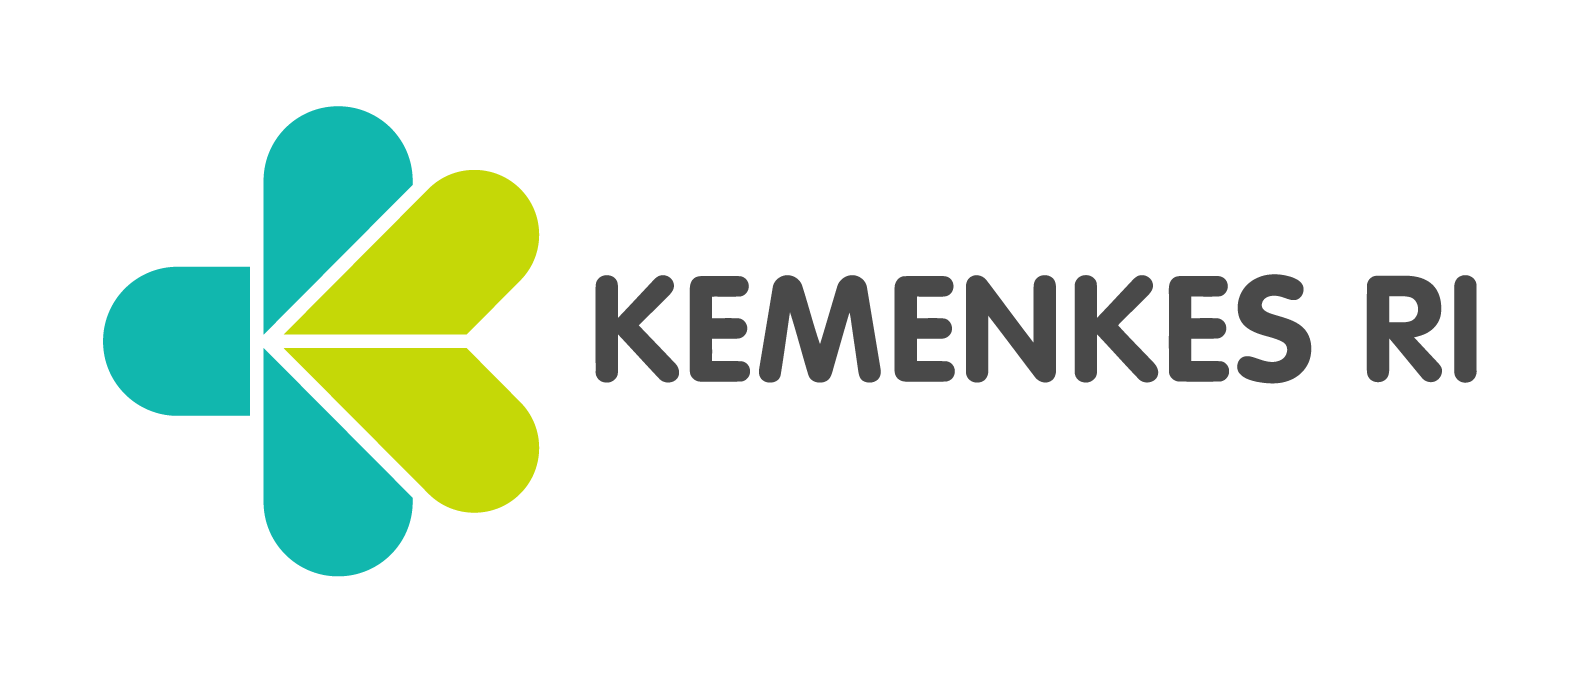 Download Logo Kemenkes Vektor AI High Quality - Mas Vian